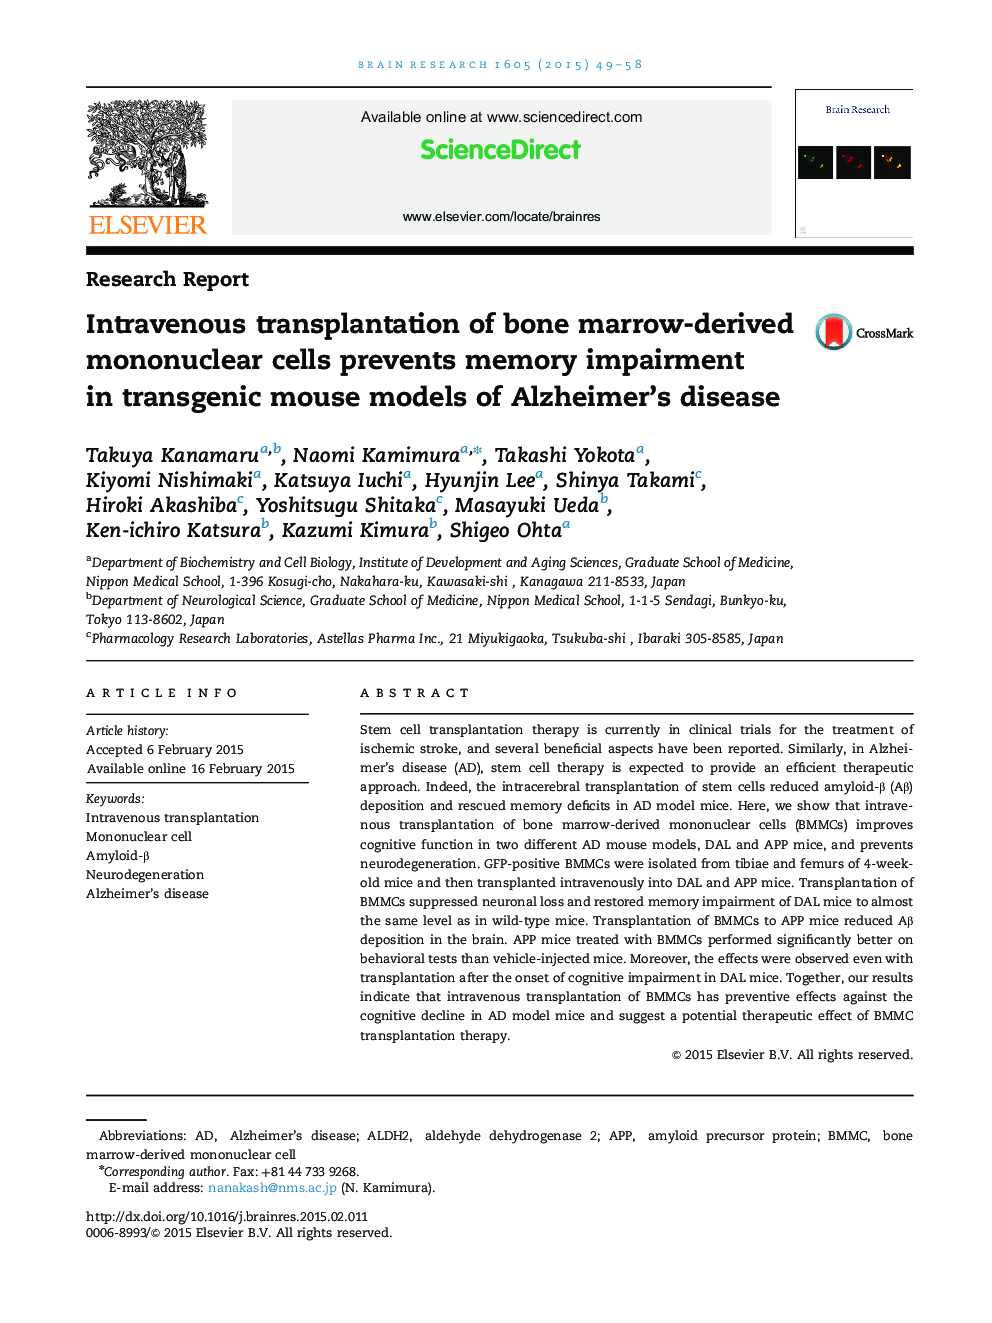 Intravenous transplantation of bone marrow-derived mononuclear cells prevents memory impairment in transgenic mouse models of Alzheimer’s disease